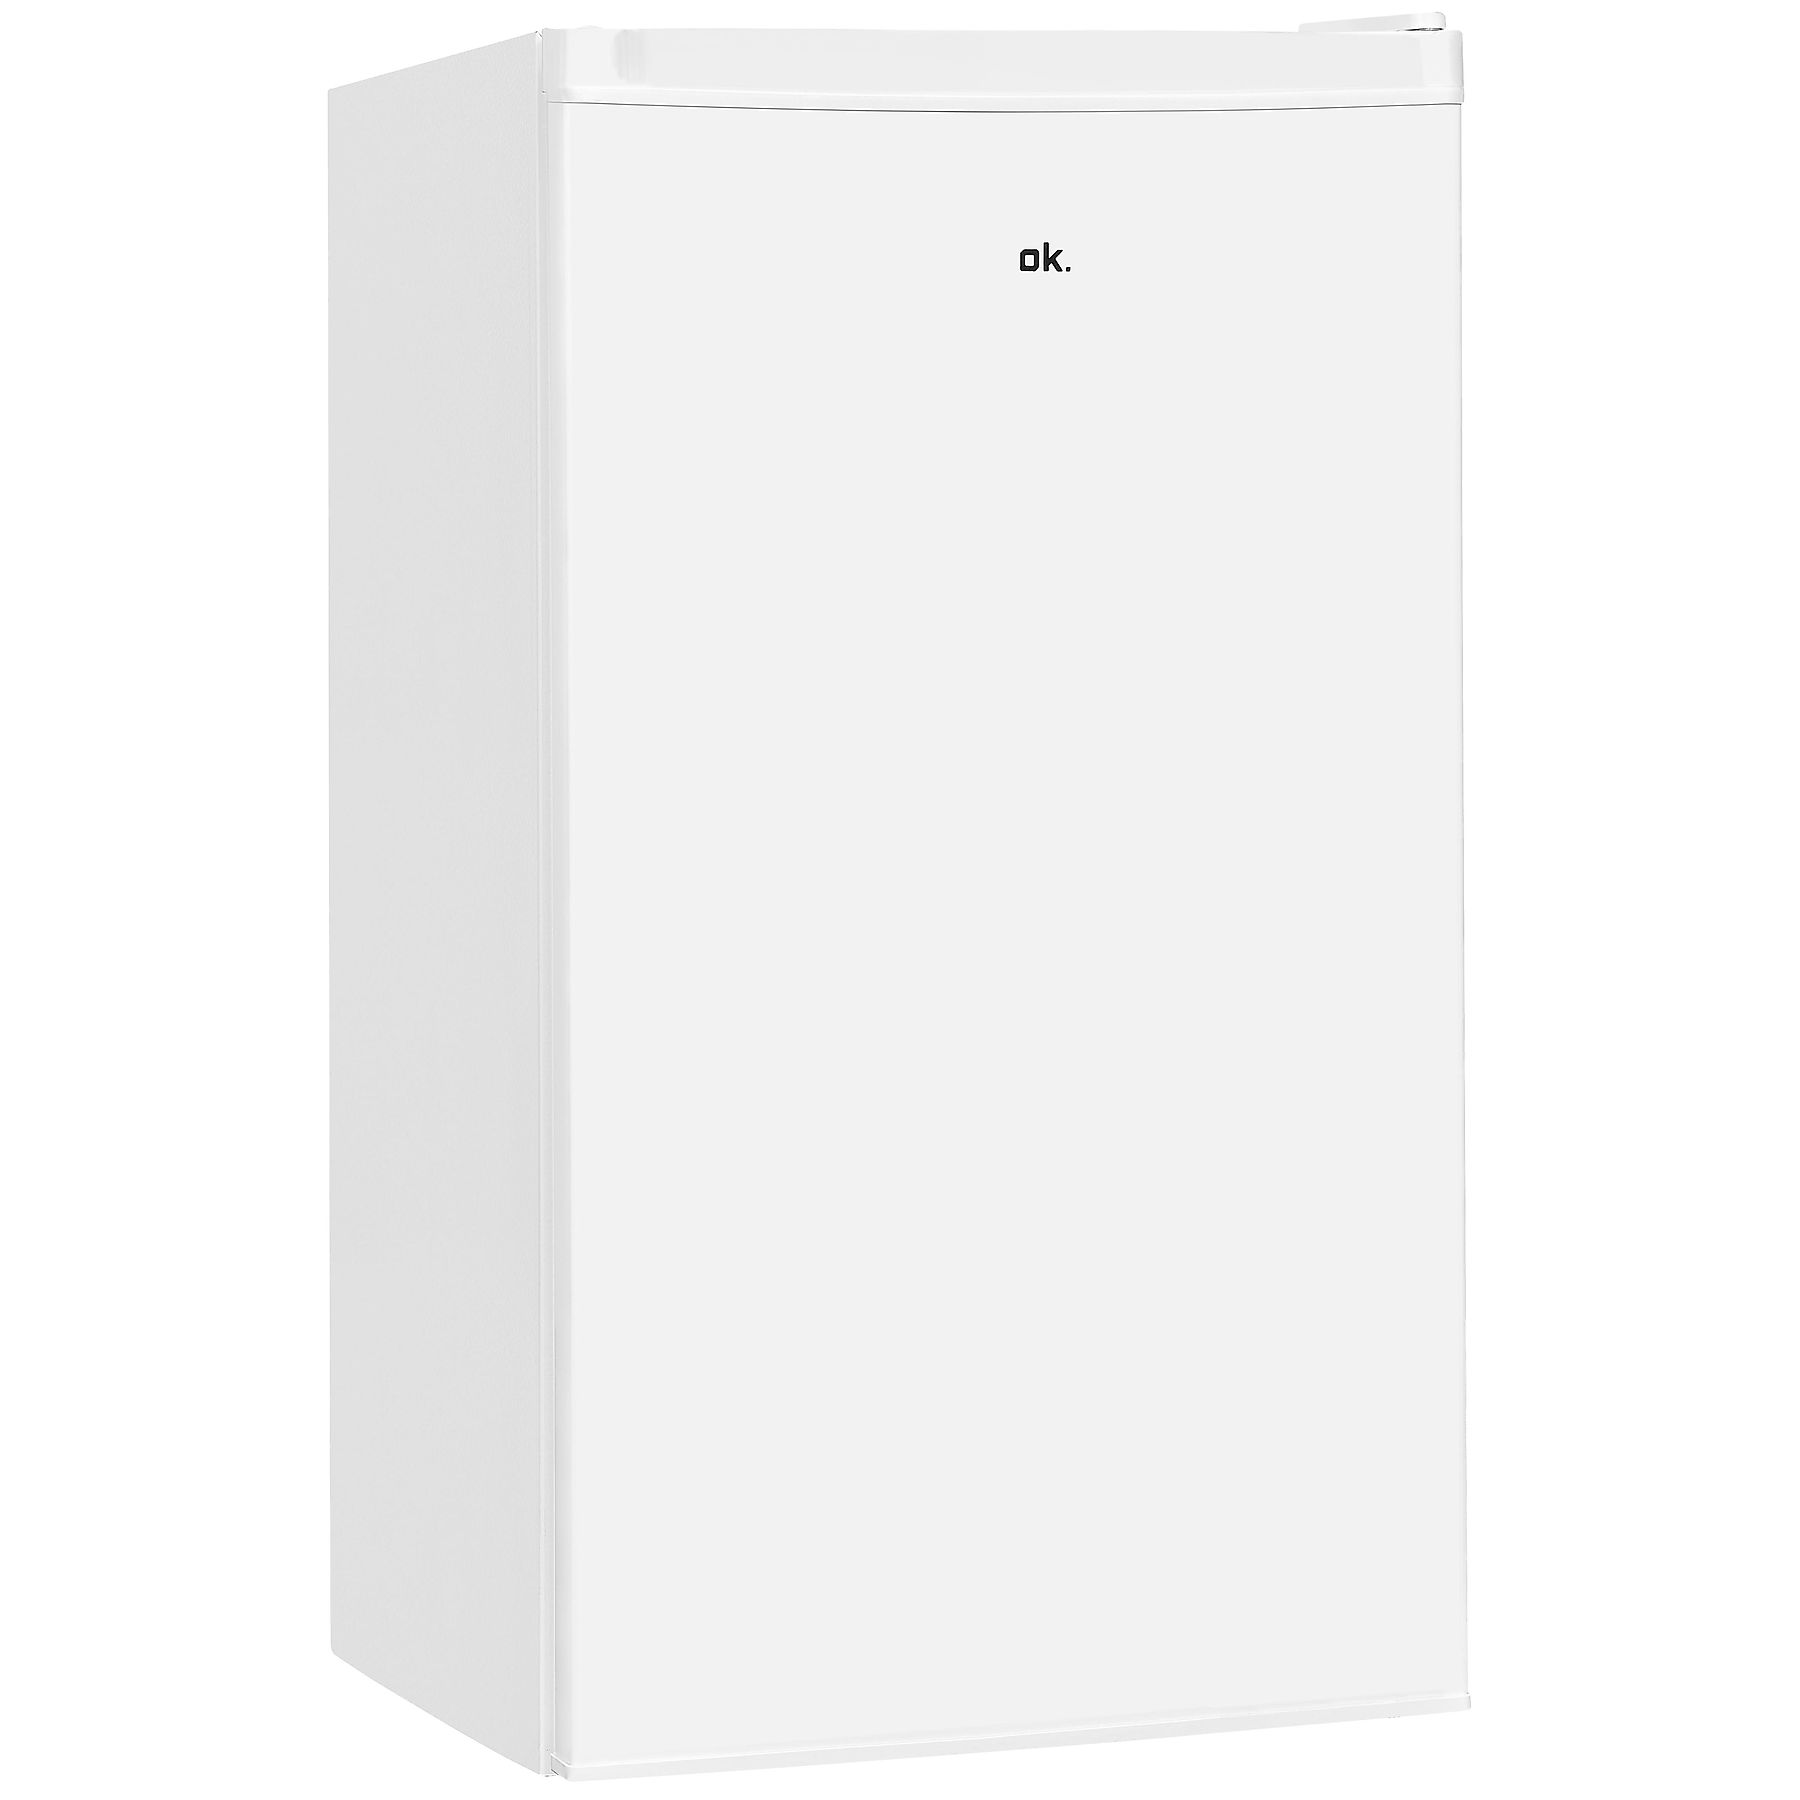 OK OFR181EW Tafelmodel koelkast (E, 832 mm hoog, wit)